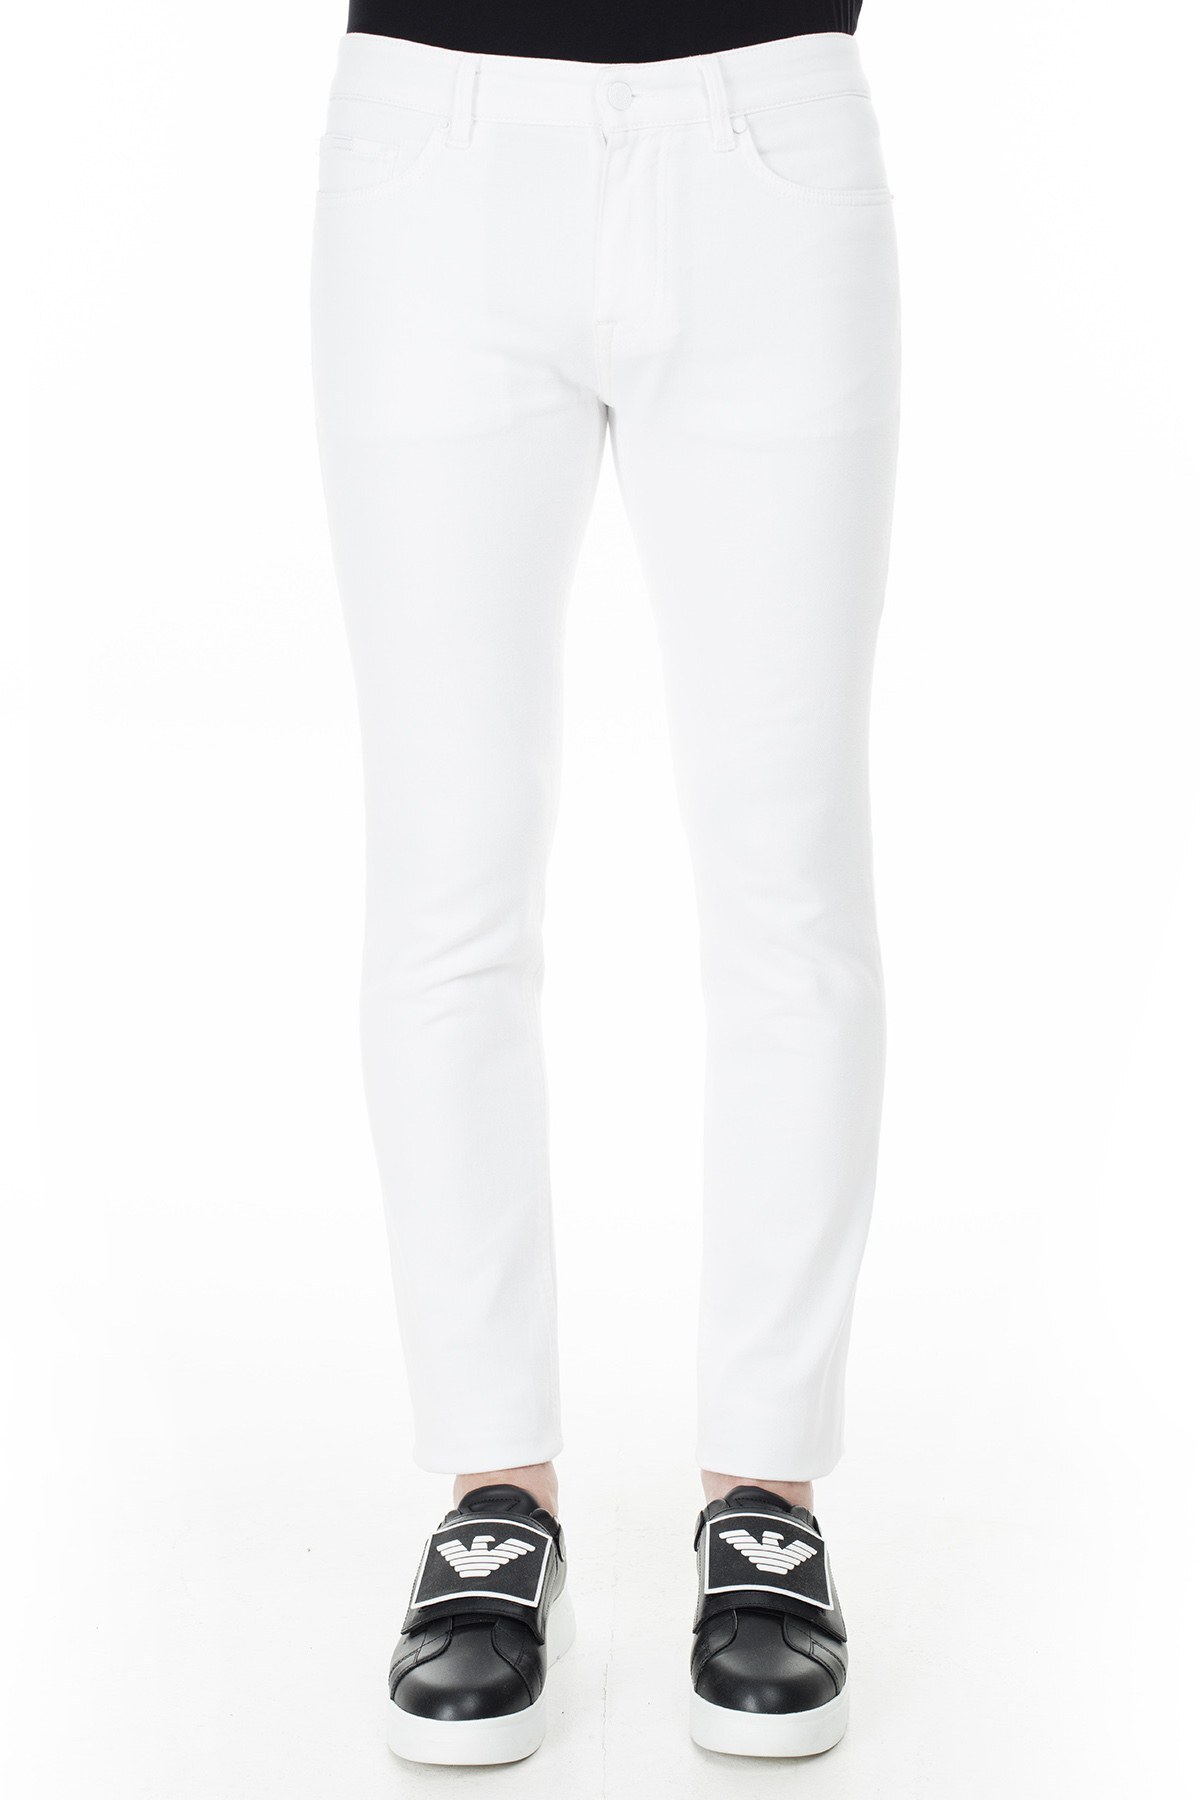 Hugo Boss Slim Fit Jeans Erkek Kot Pantolon 50426531 100 BEYAZ